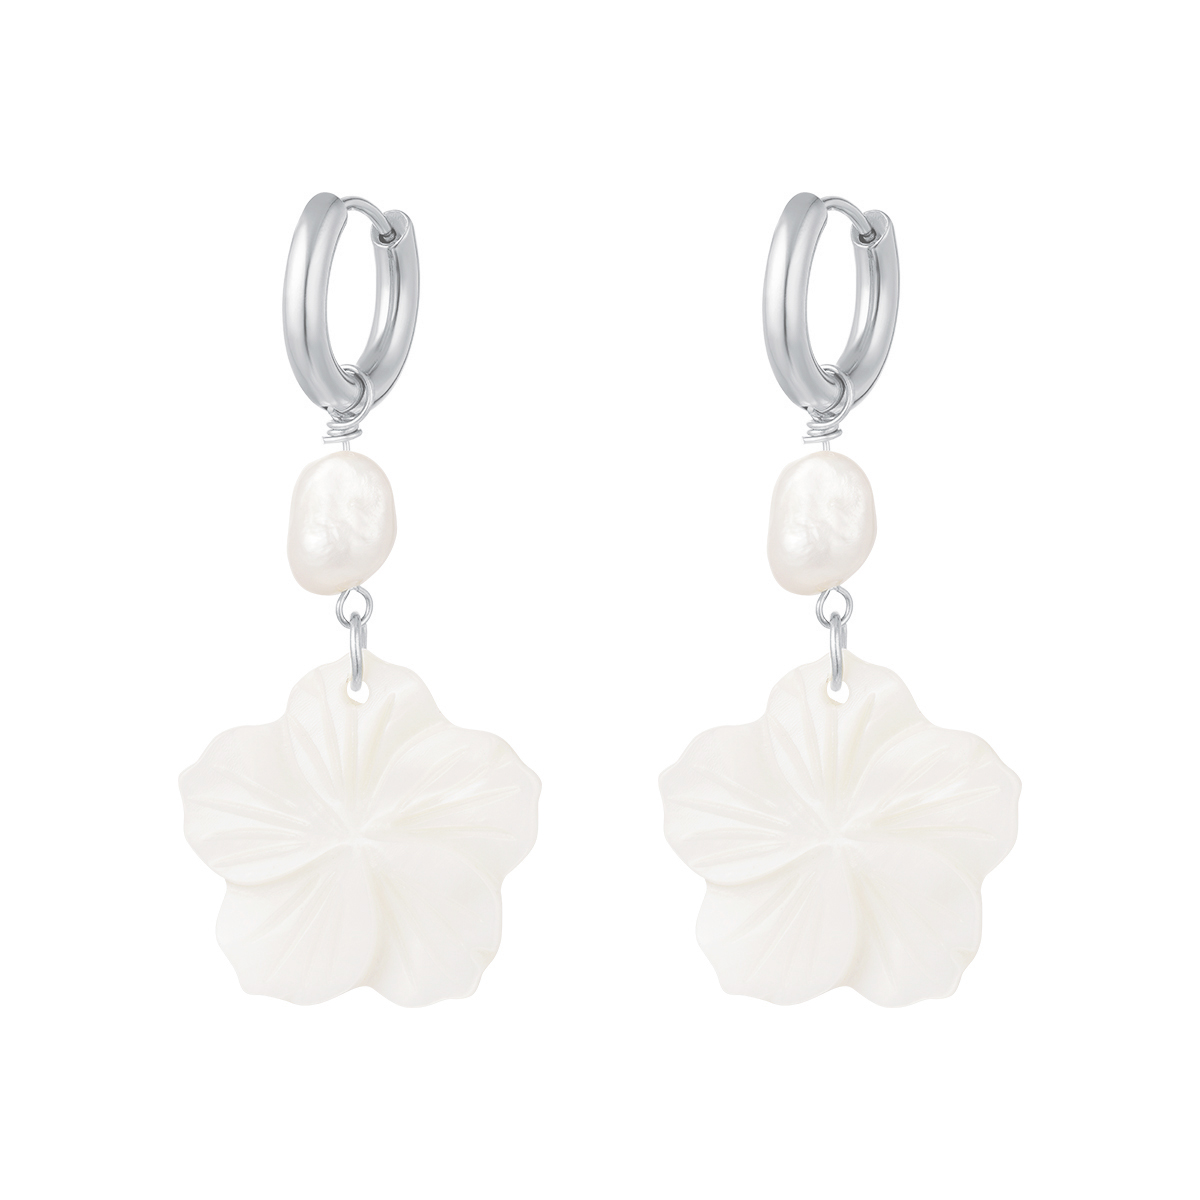 Flower earrings - Beach collection